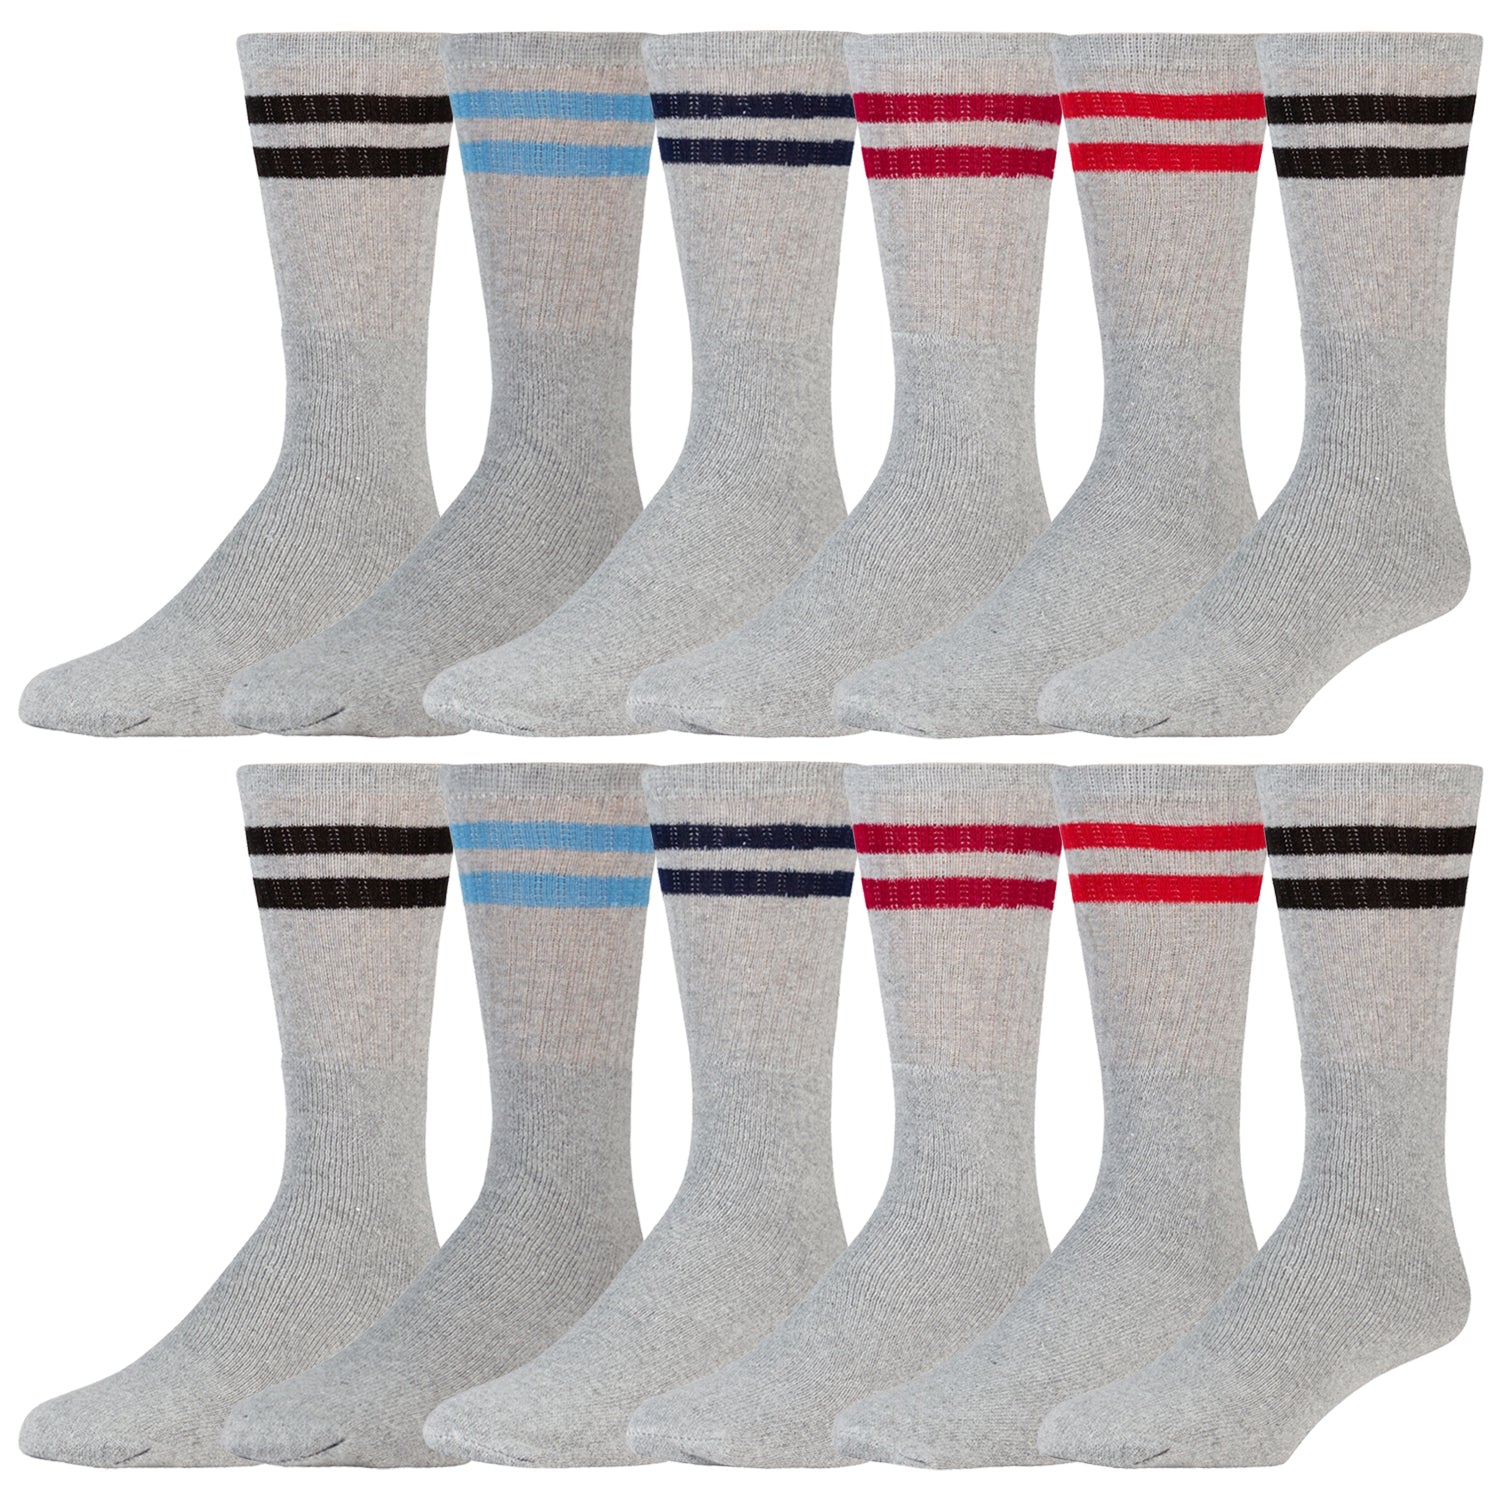 Men's & Women's Referee Style Cotton Sports Socks